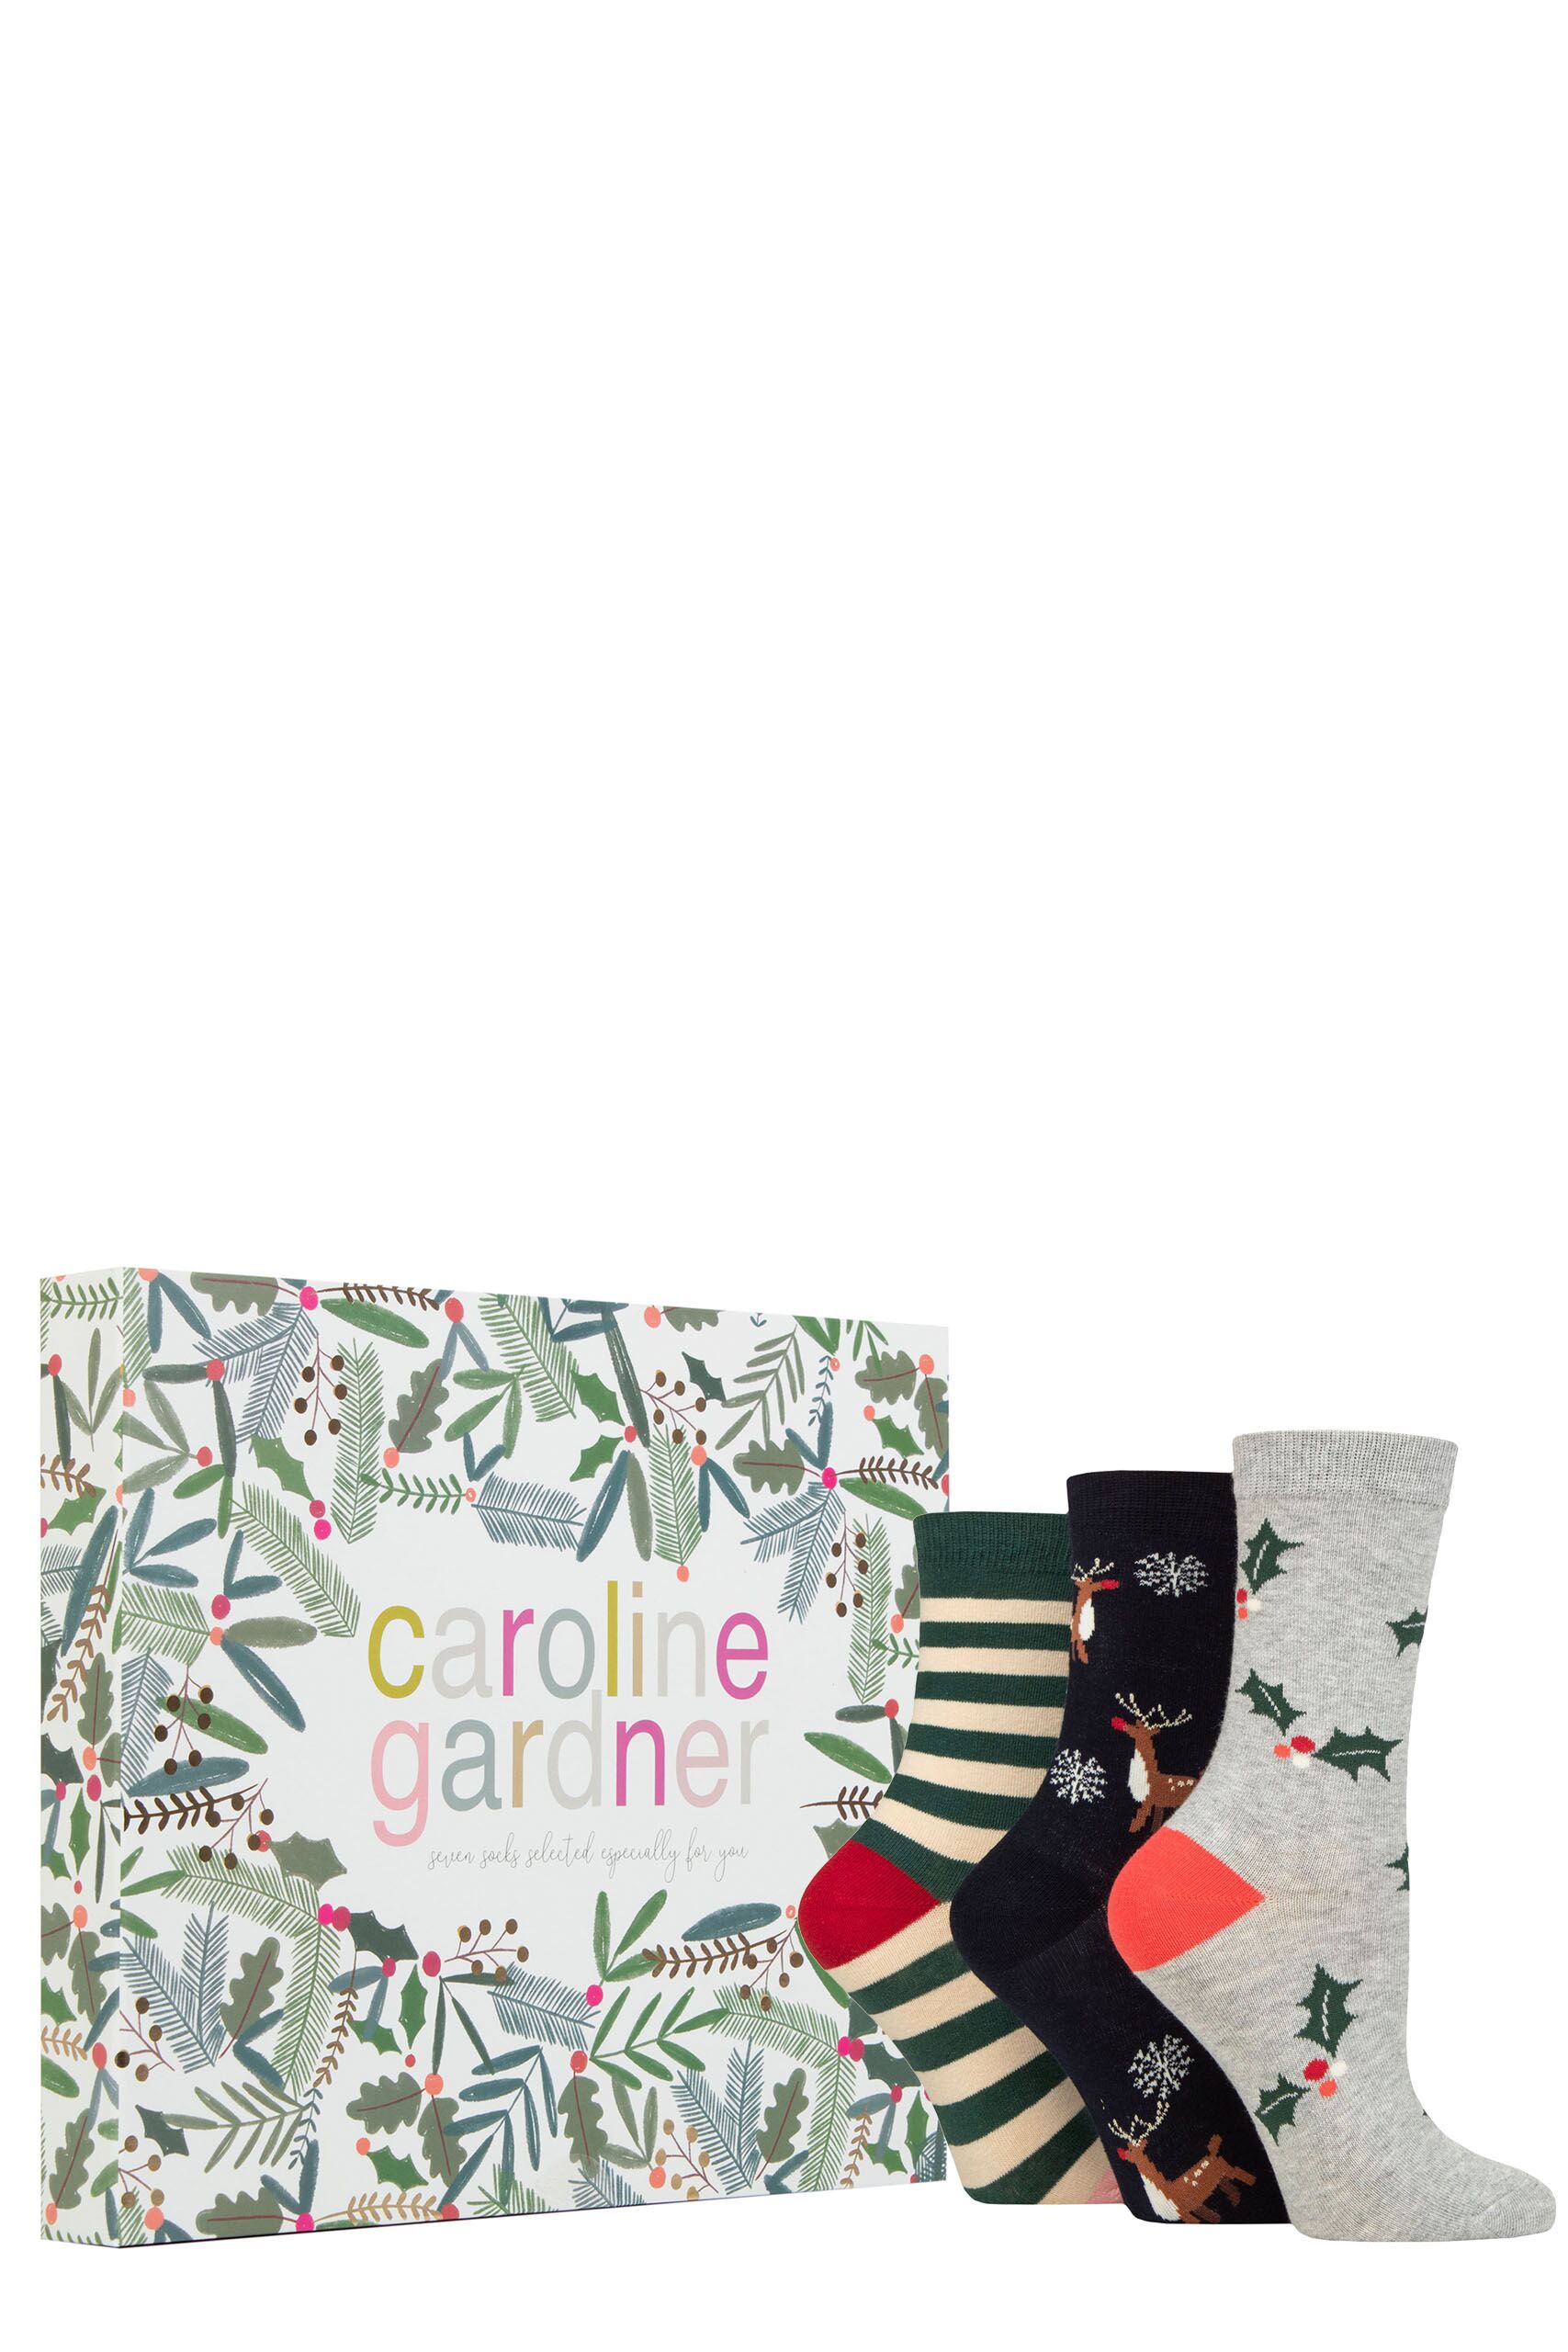 Ladies 7 Pair Caroline Gardner 7 Day Christmas Foliage Gift Cotton Boxed Socks Multi 4-8 Ladies